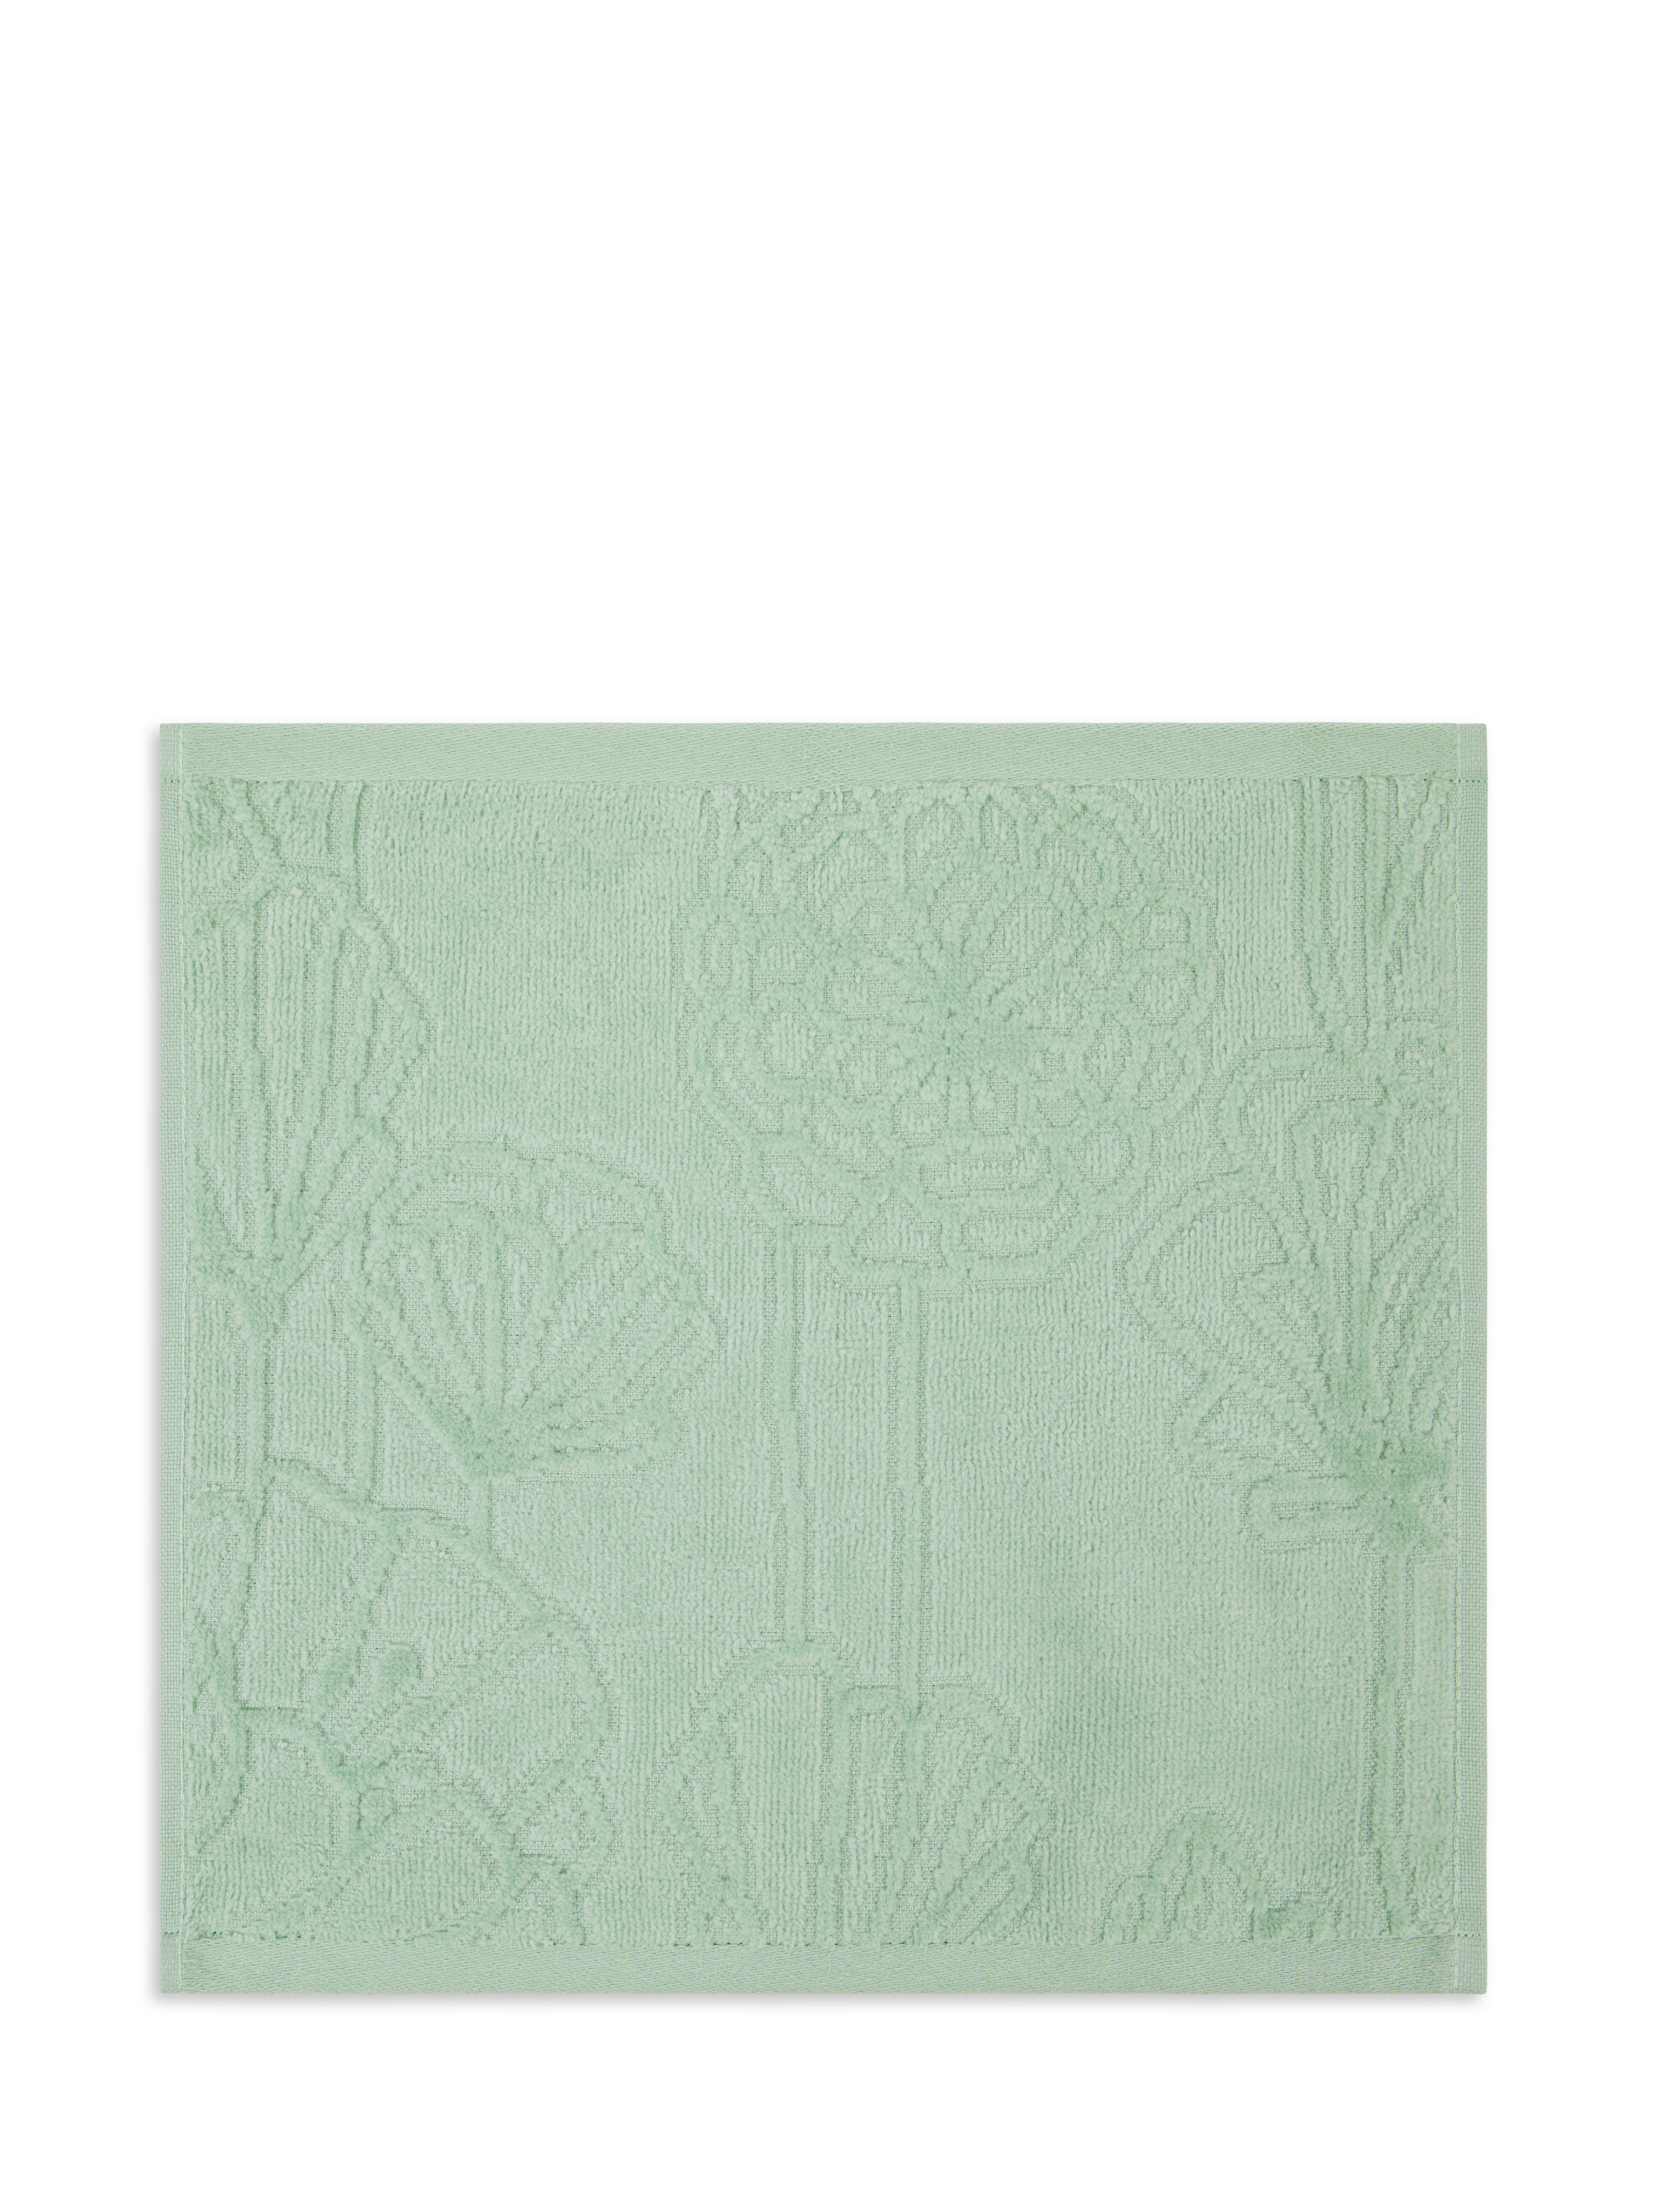 Set 2 lavette cotone velour motivo floreale, Verde, large image number 2